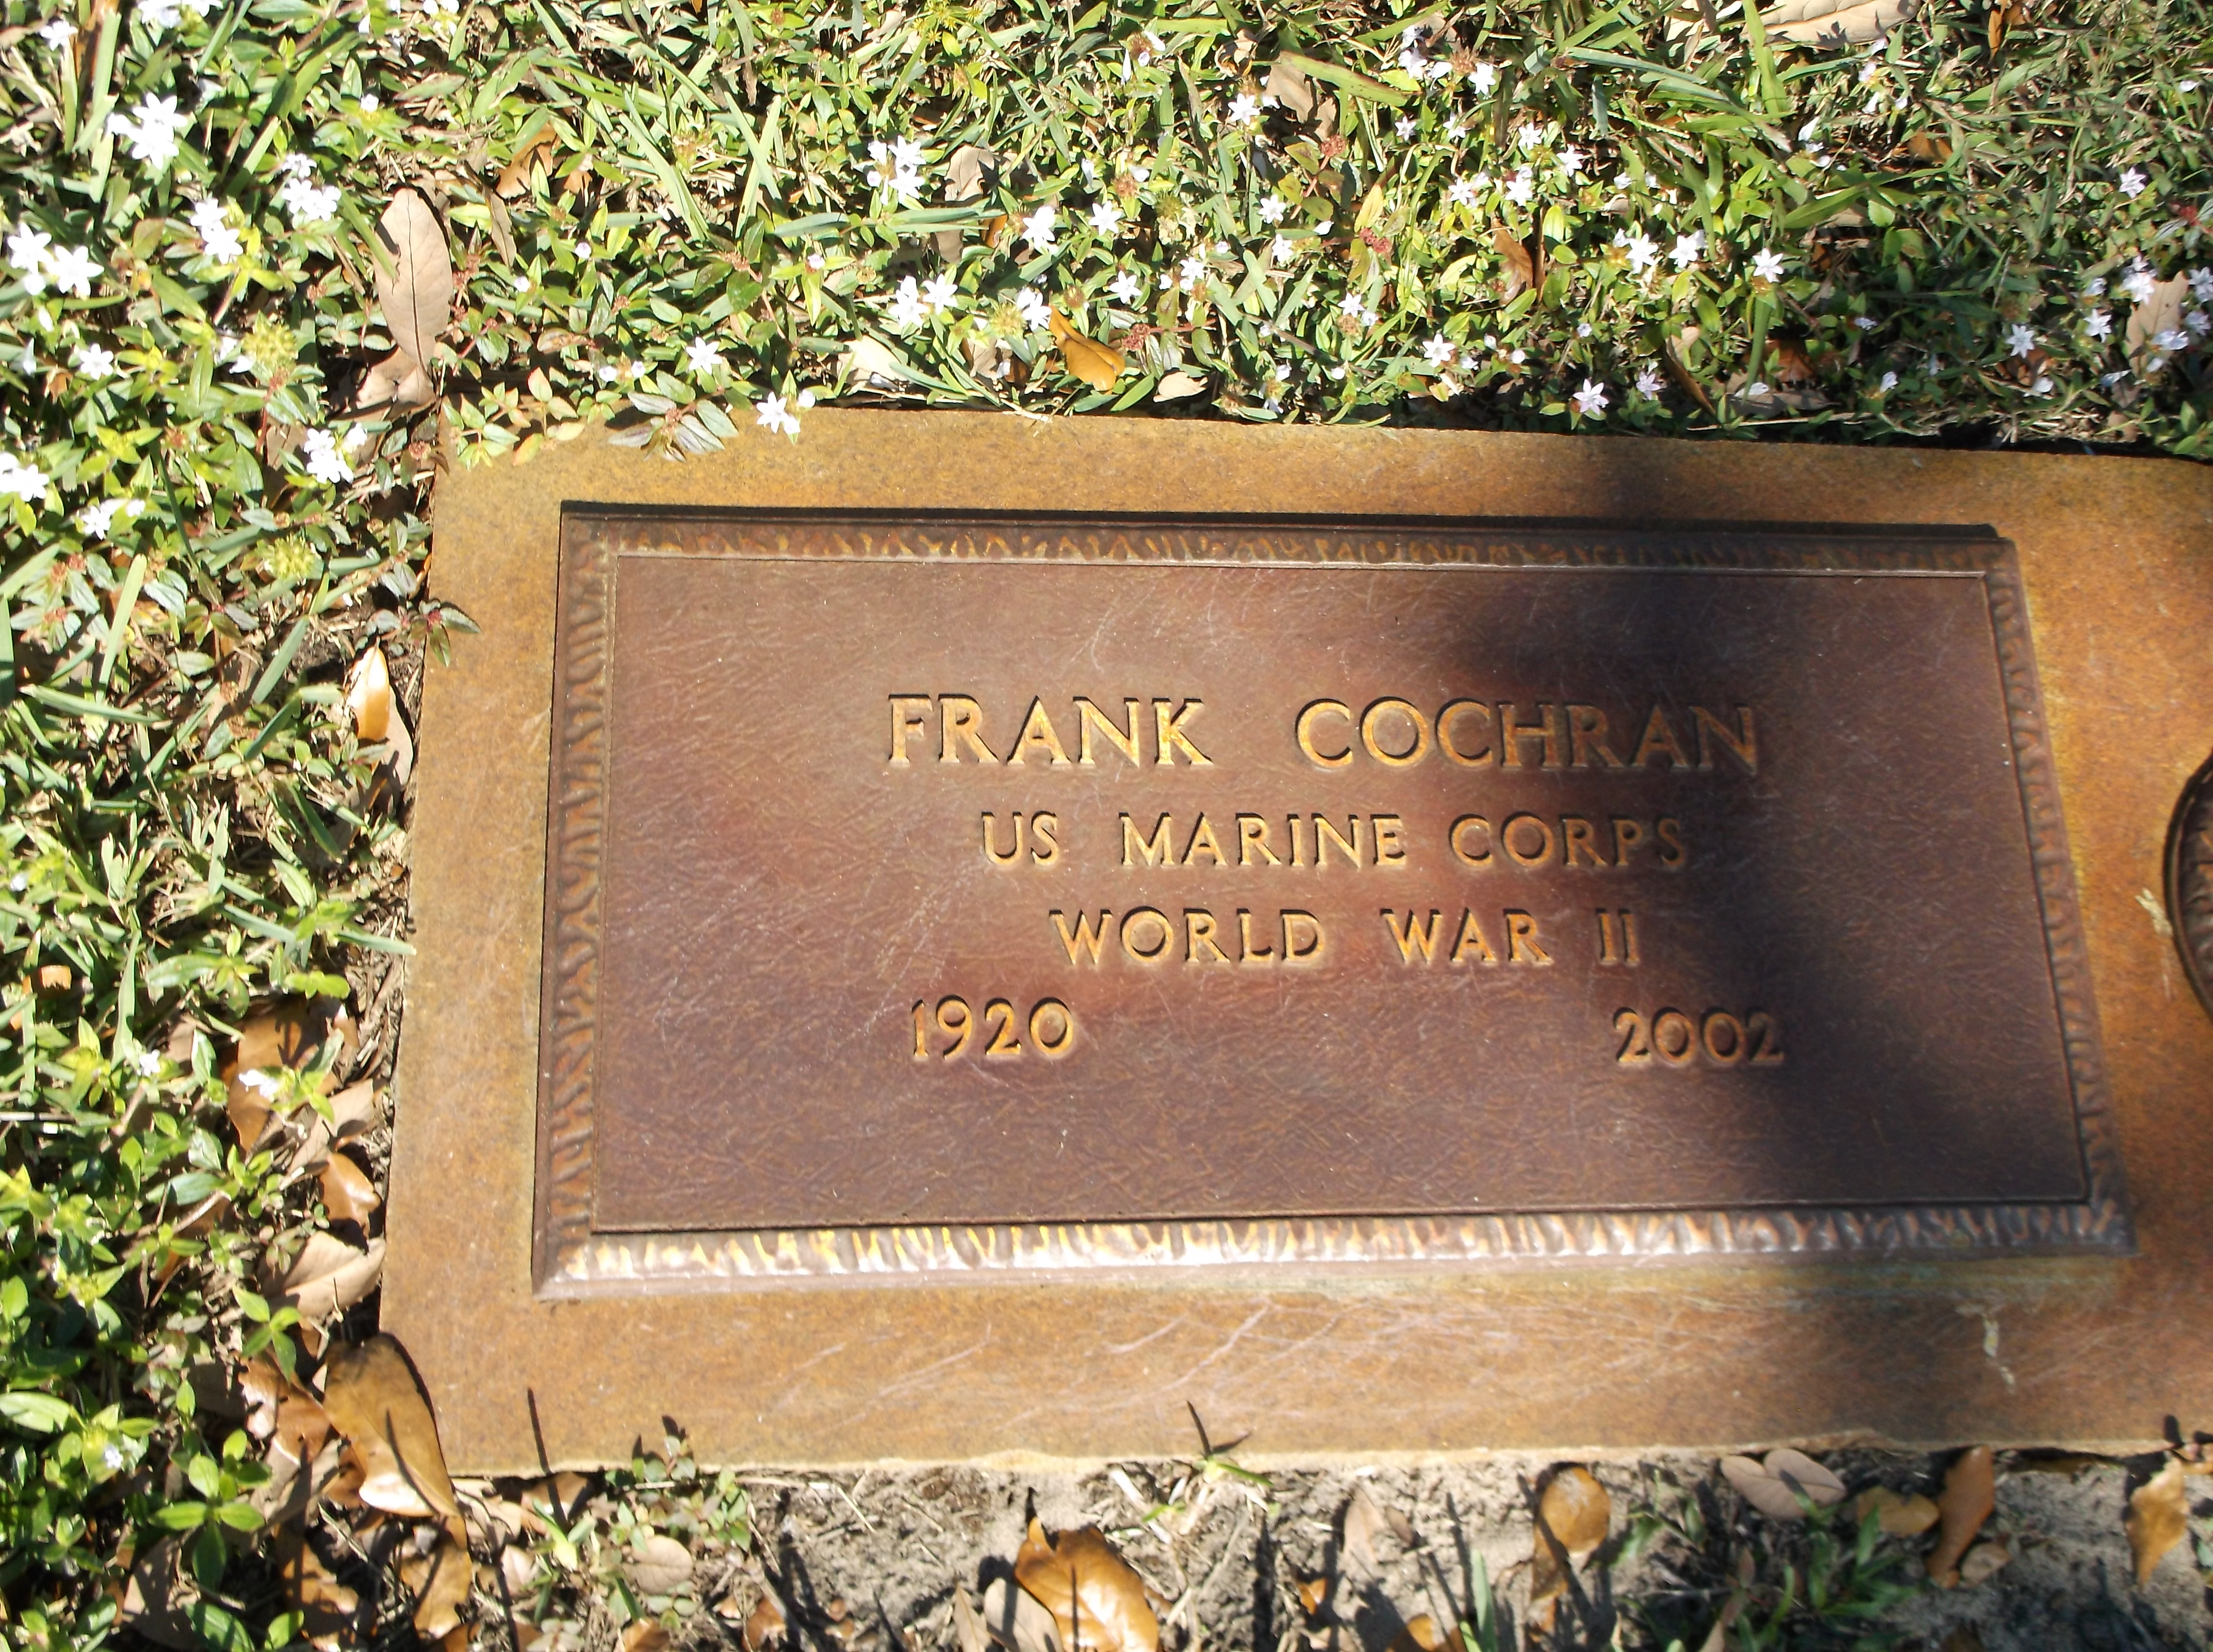 Frank Cochran